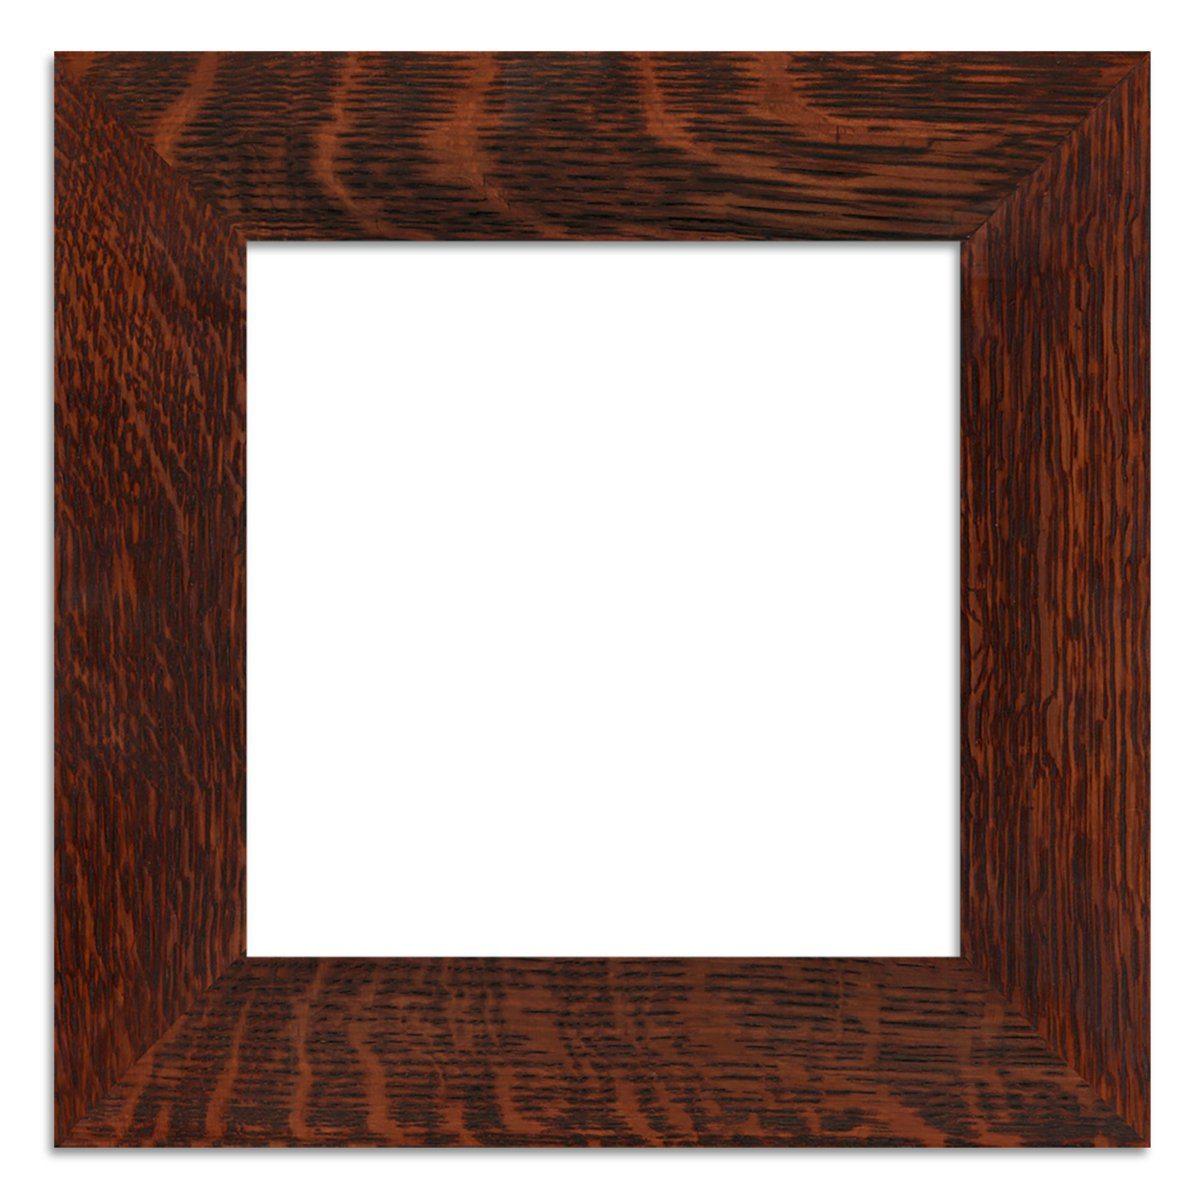 Single Tile Frame Tile Family Woodworks fits 8x8 tile 2 inch width Dark Mission Cherry